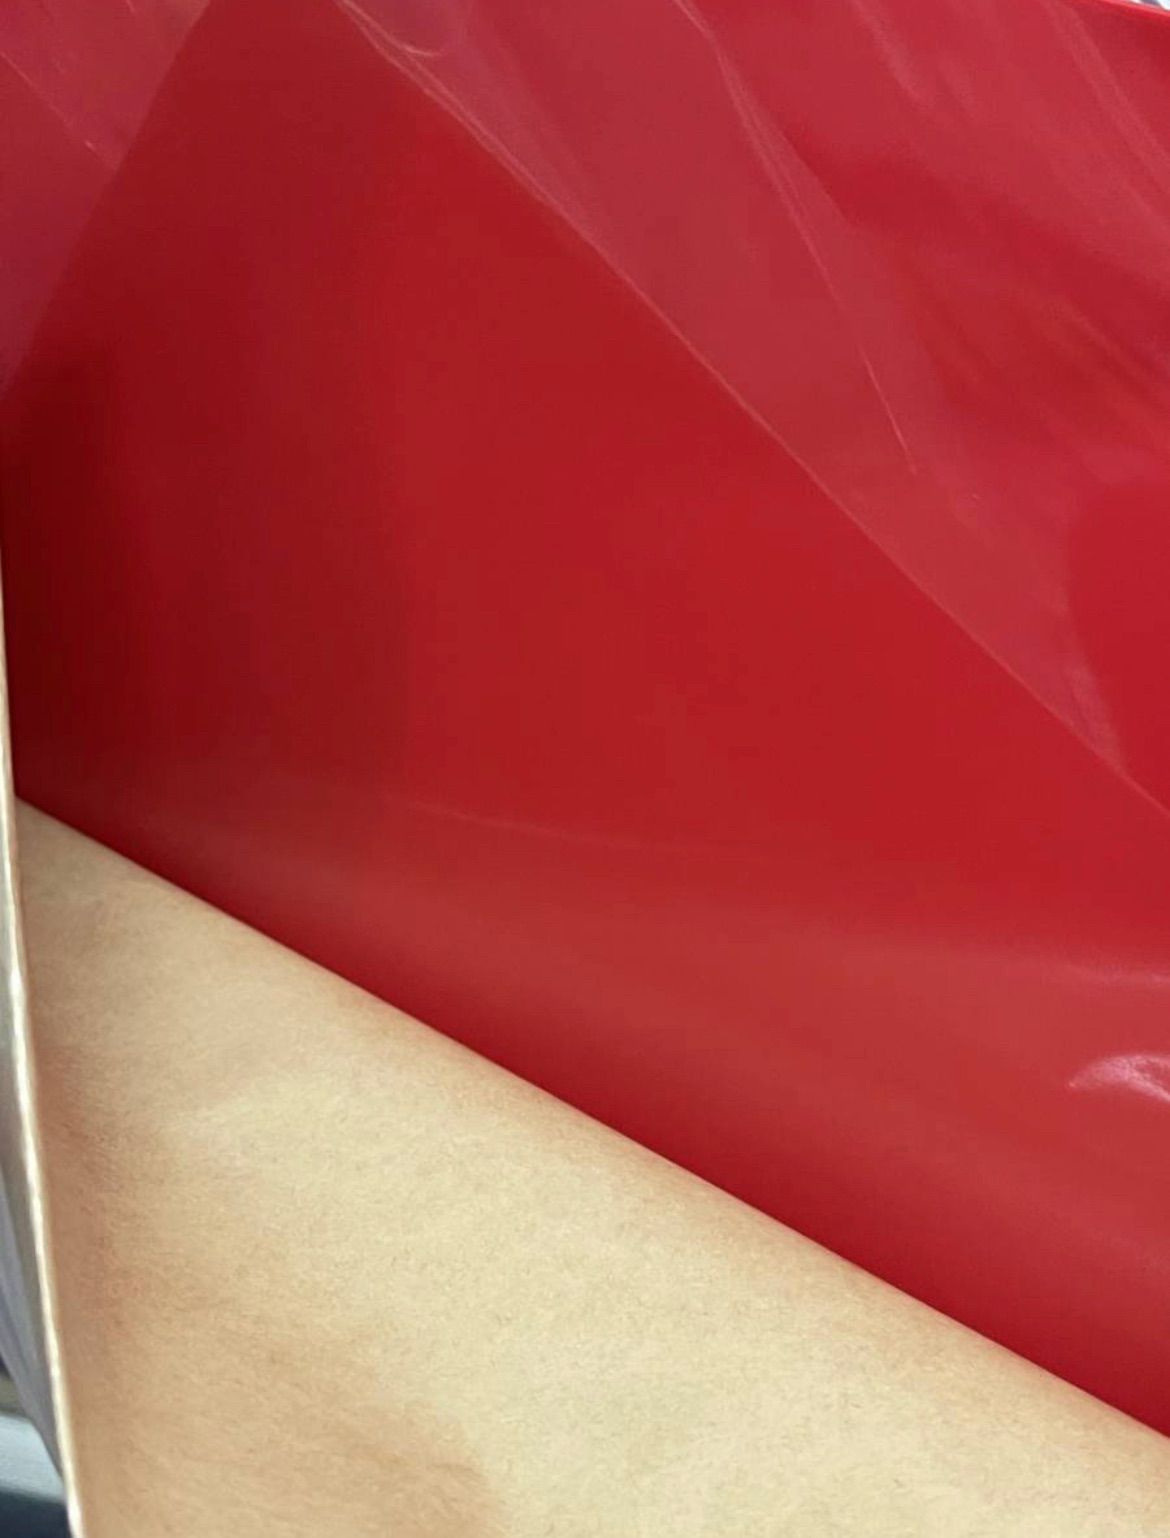 EVA レッド 赤 厚さ3ｍｍ 2500X600 タレゴム 垂れゴム 泥除け エバ デコトラ アート レトロ 三分割 国産 トラックショップASC -  メルカリ